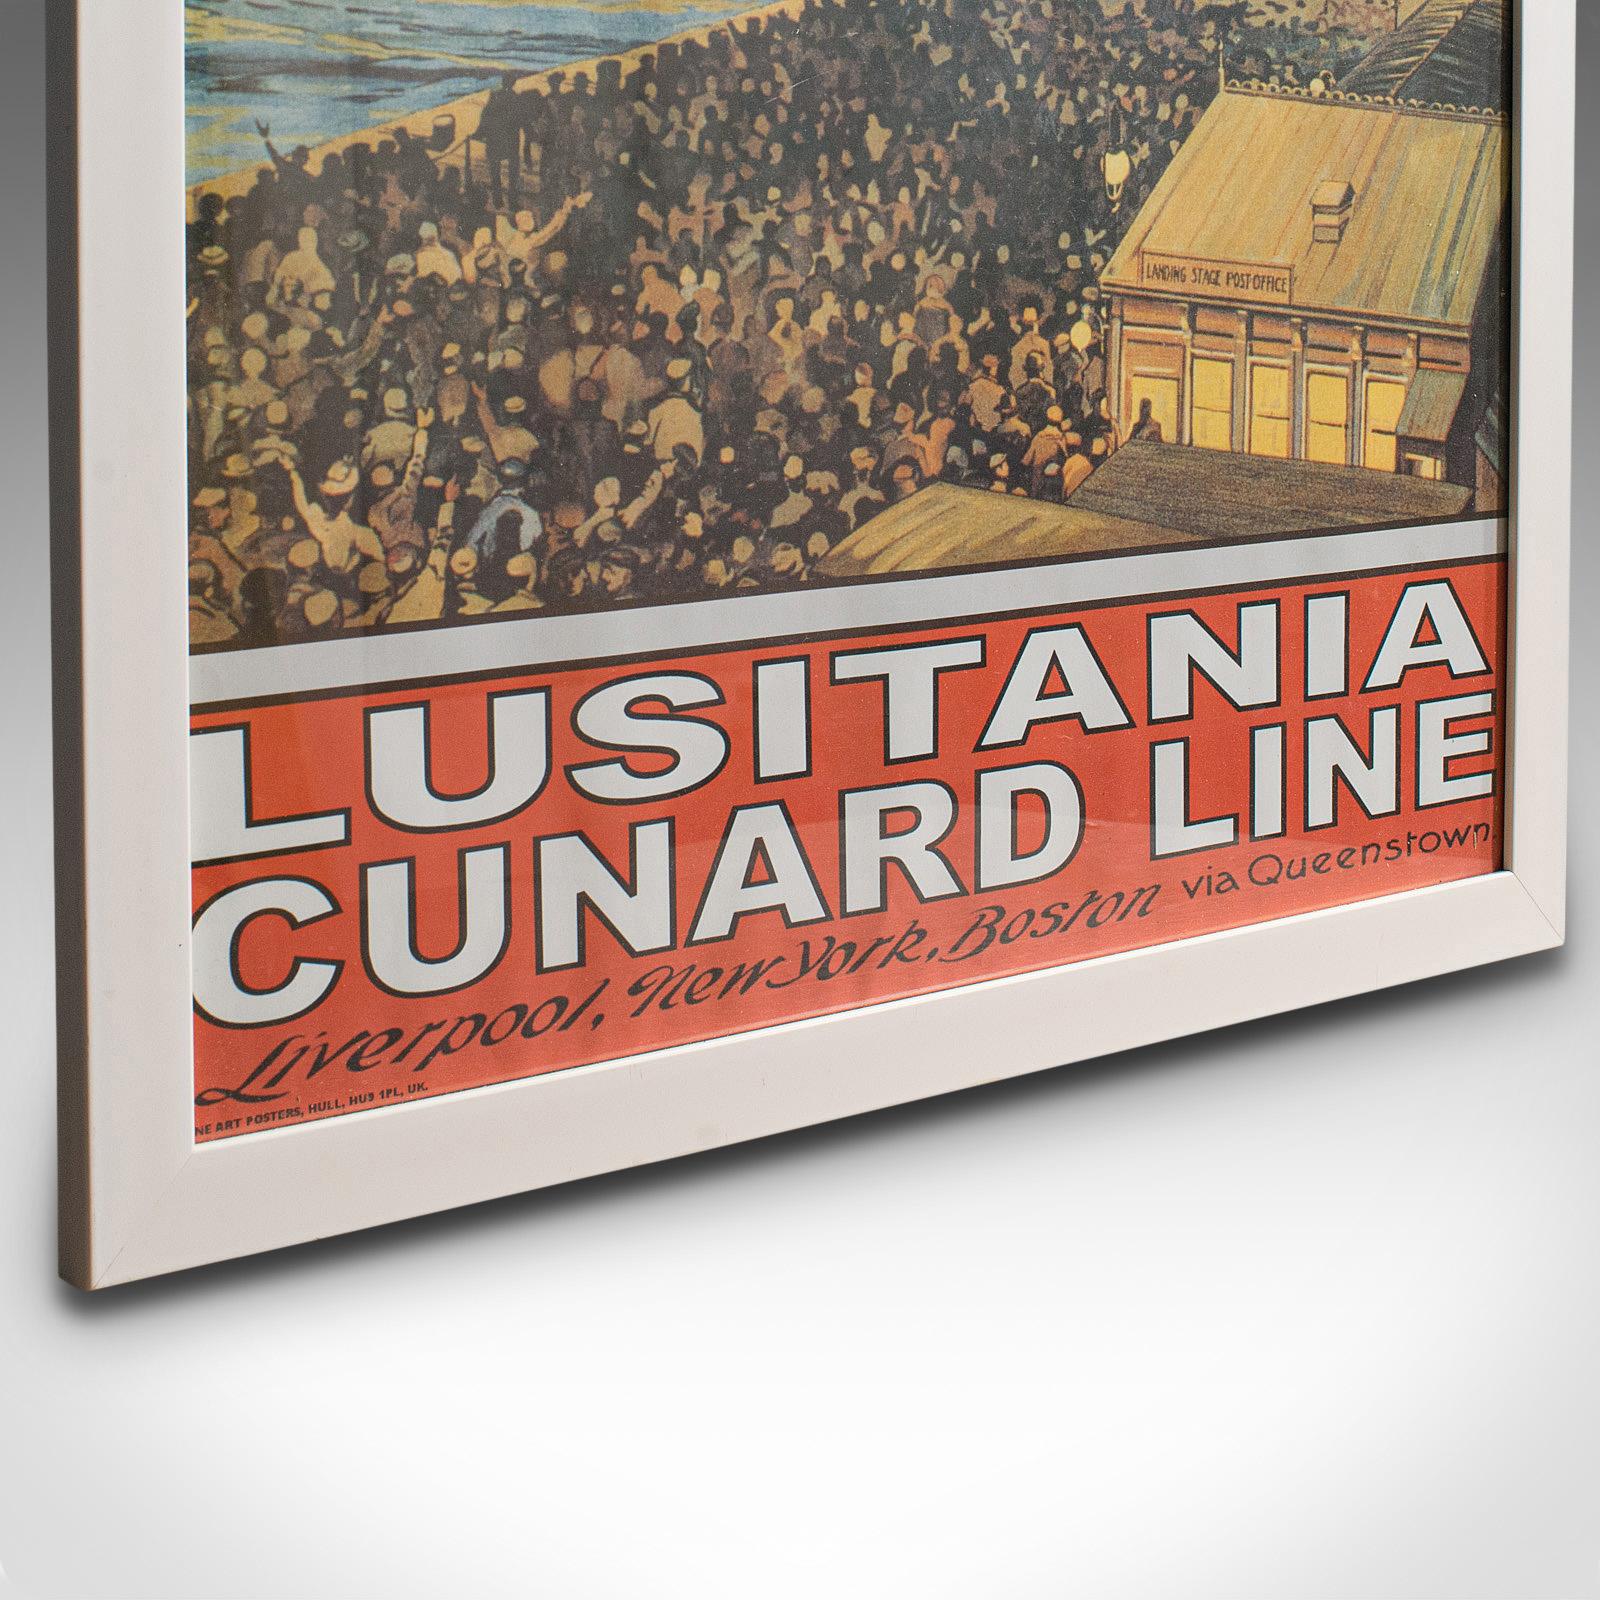 British Vintage Cunard Cruise Line Poster, English, Print, RMS Lusitania, Maritime, Ship